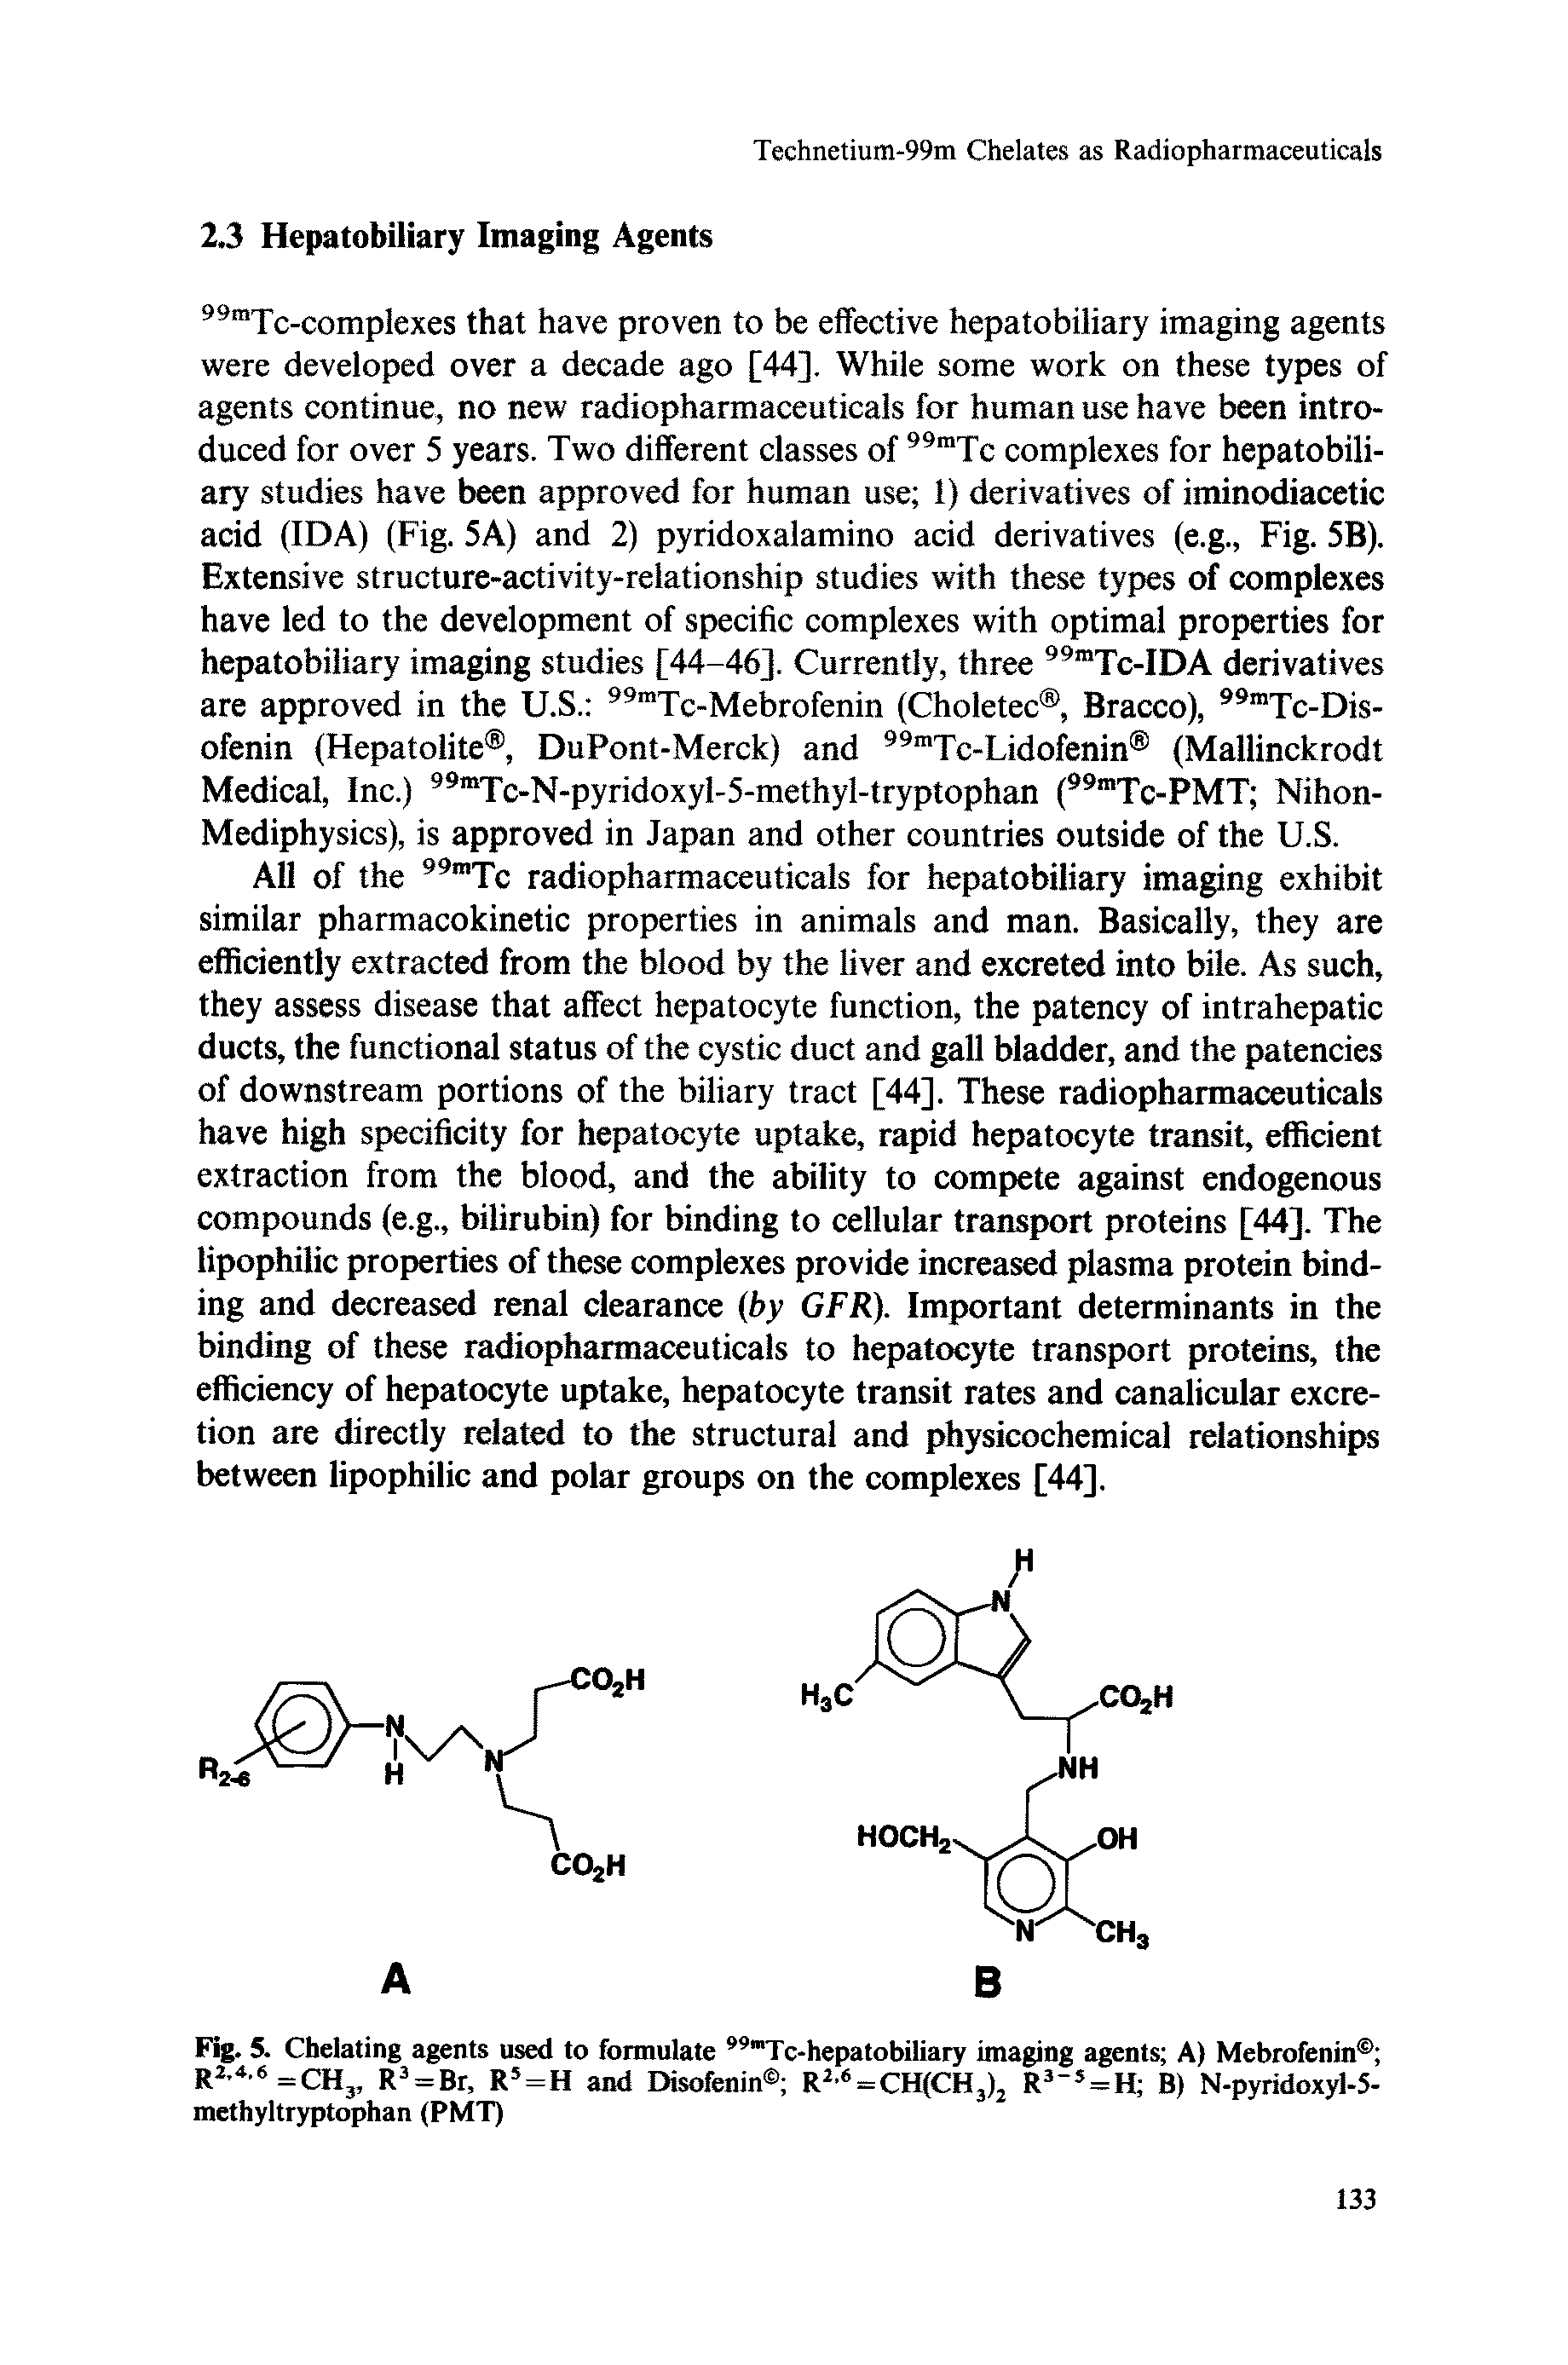 Fig. 5. Chelating agents used to formulate "mTc-hepatobiliary imaging agents A) Mebrofenin R2.4.6 =CH3, R3 = Br, R5=H and Disofenin R2 6 = CH(CH3)2 R3 5 = H B) N-pyridoxyl-5-methyltryptophan (PMT)...